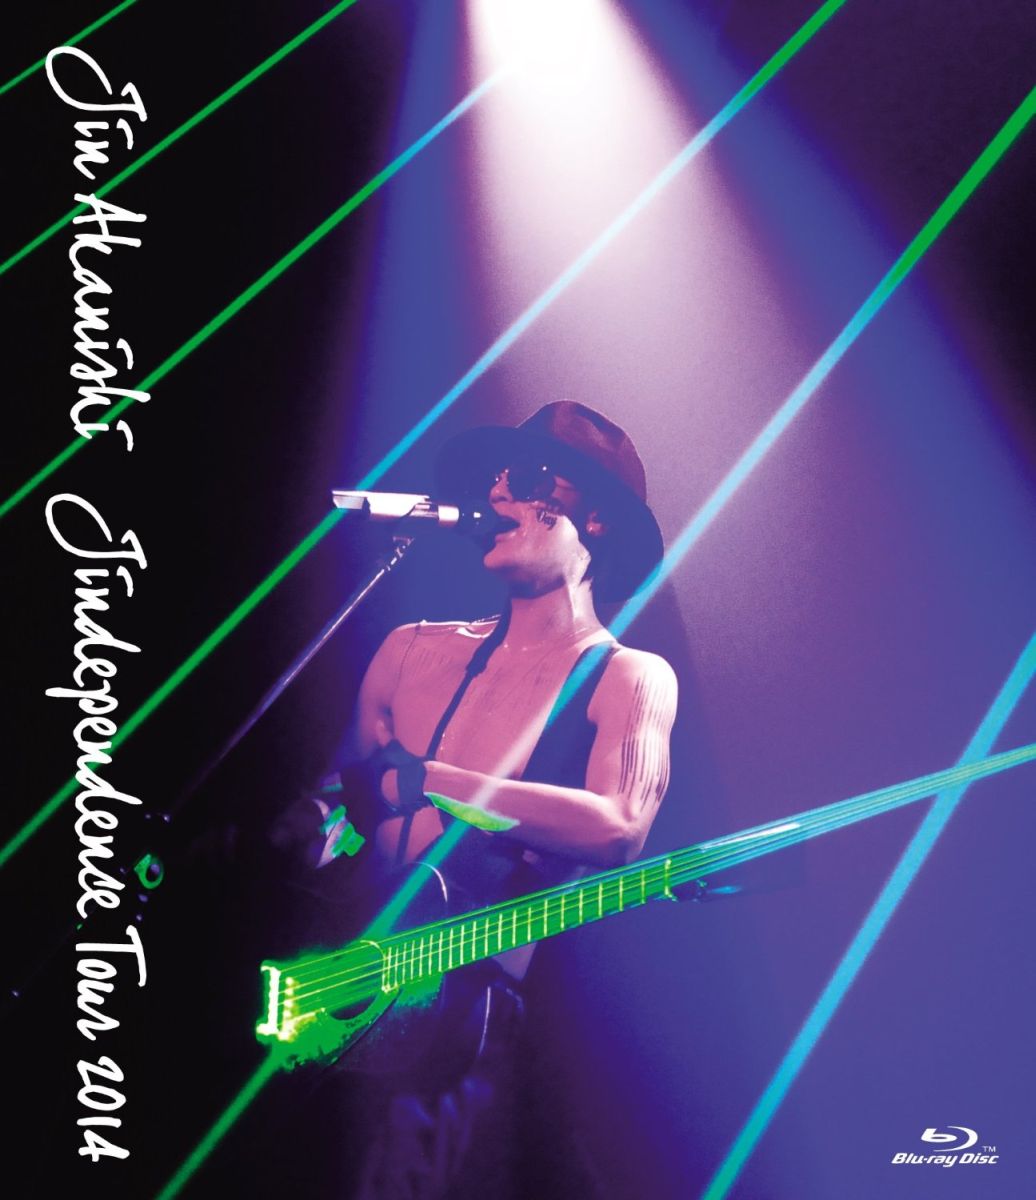 JIN AKANISHI “JINDEPENDENCE" TOUR 2014【Blu-ray】